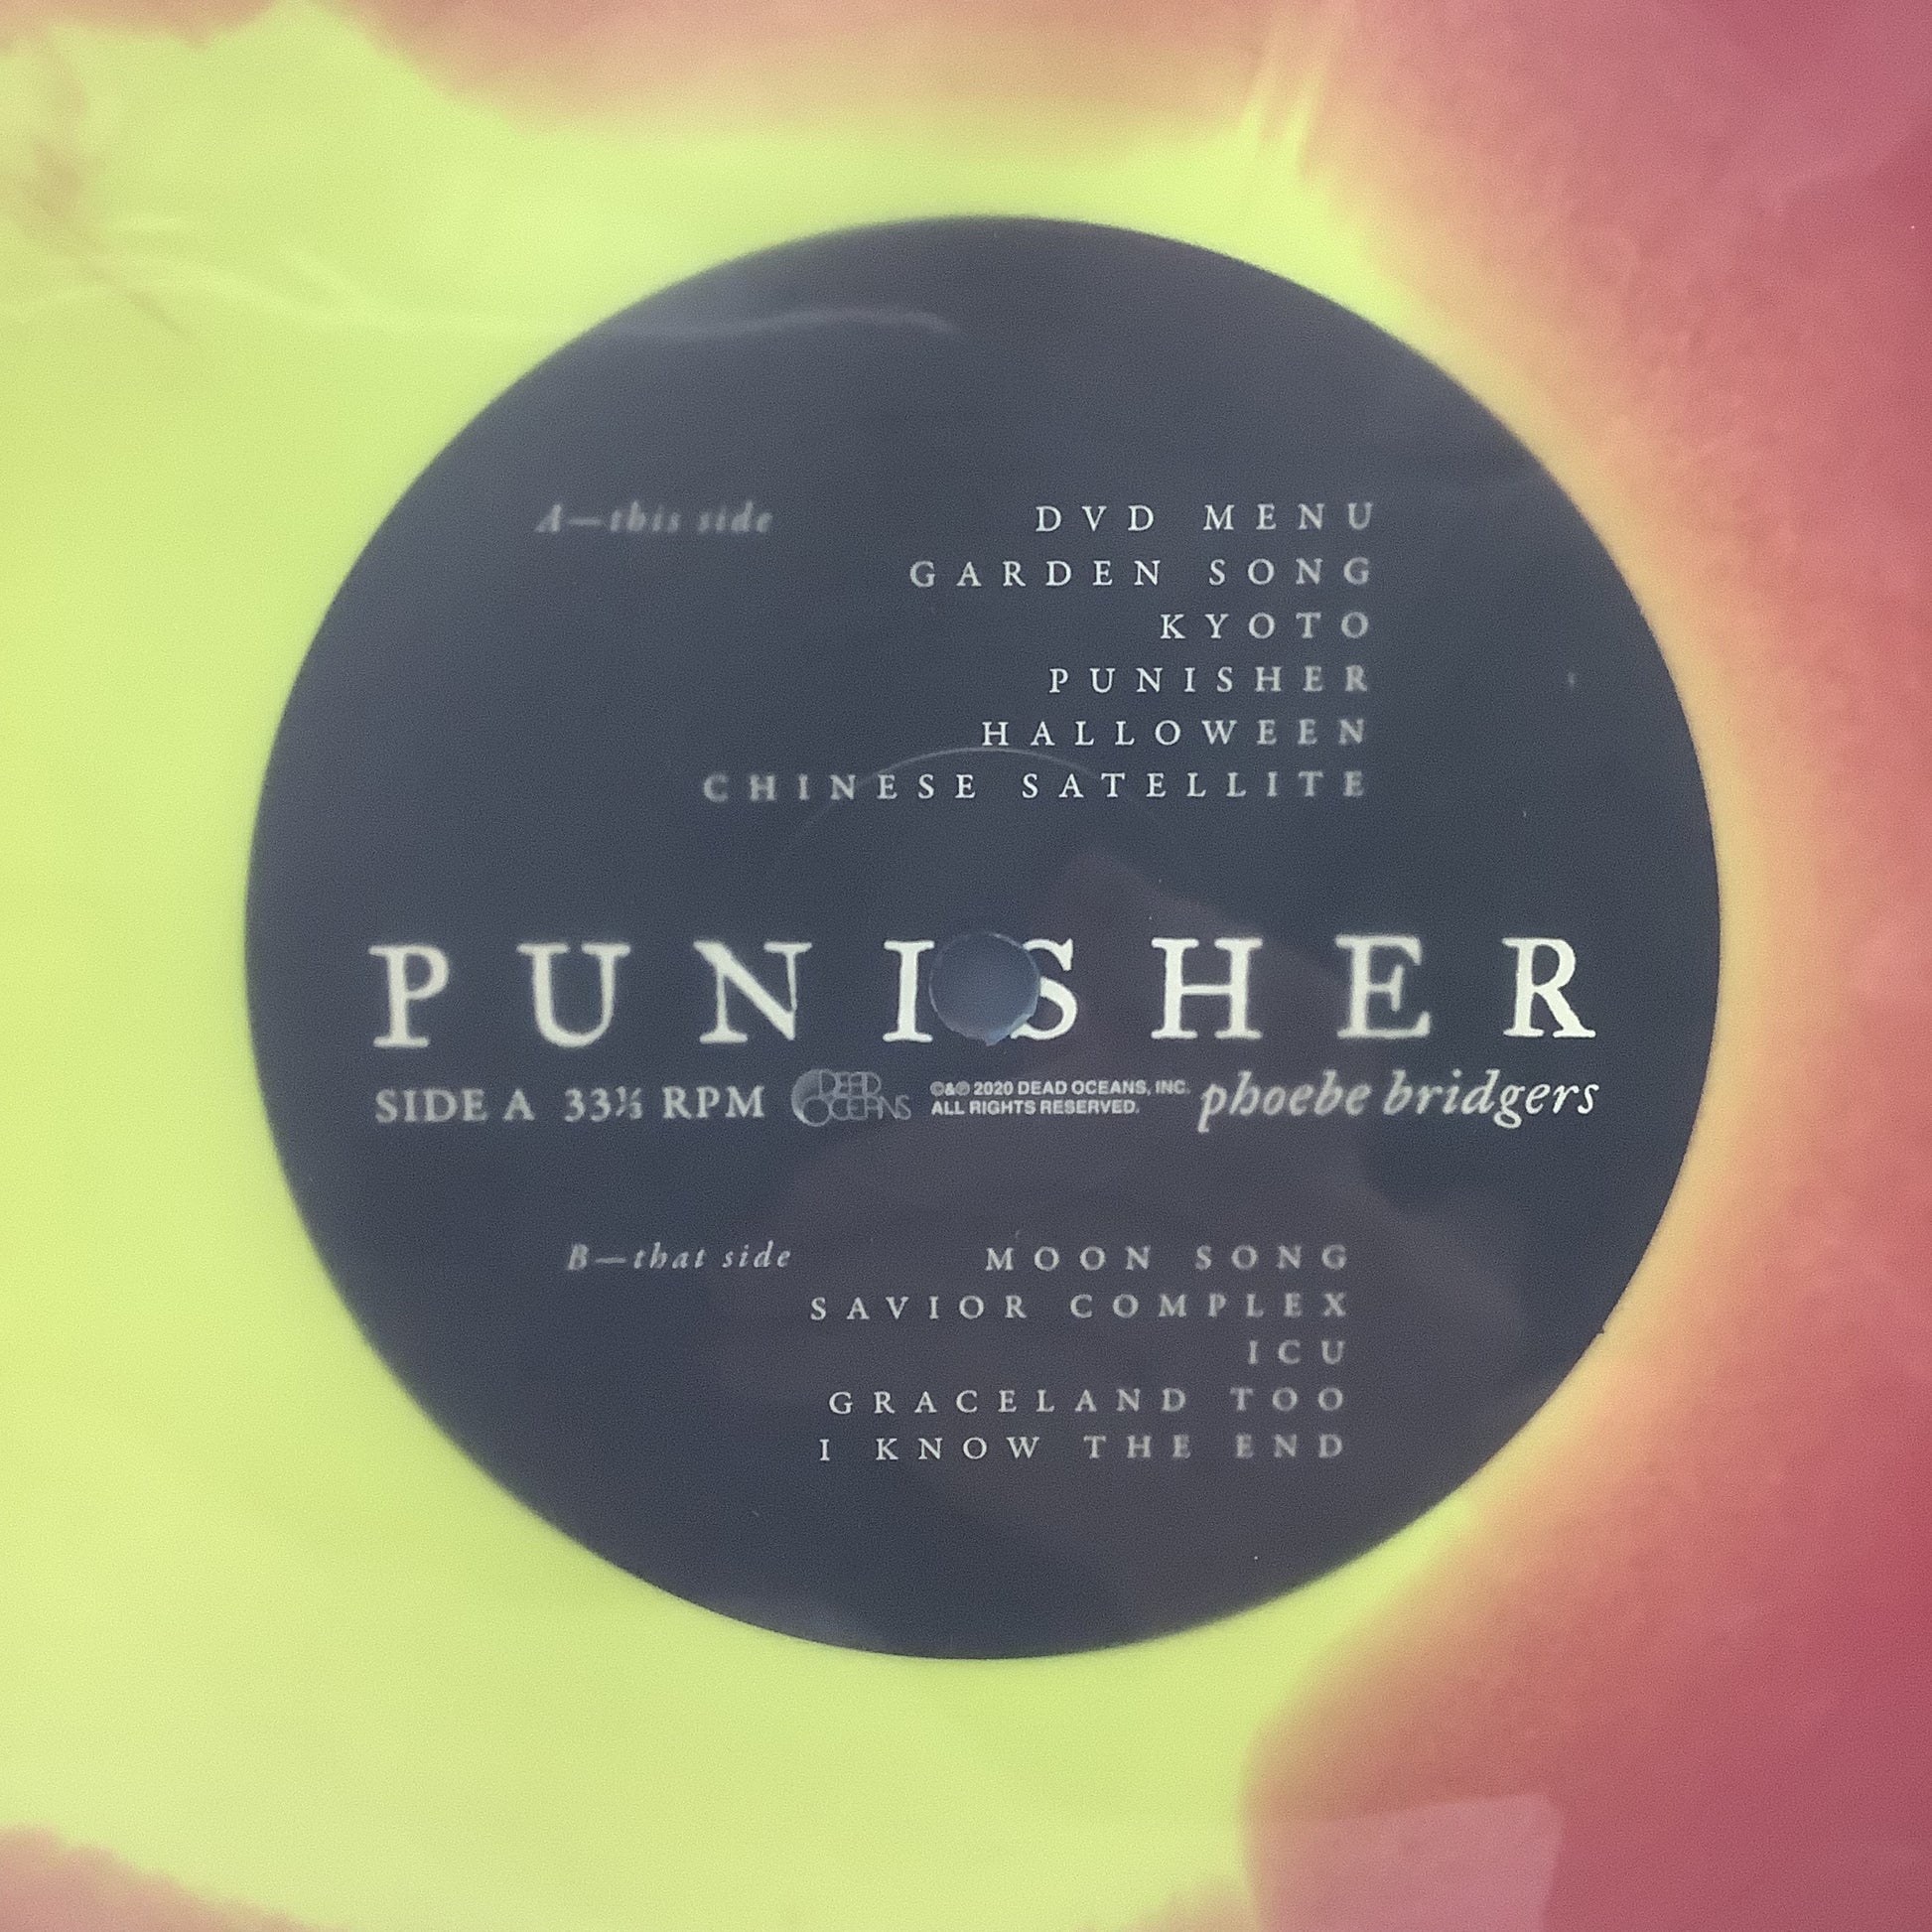 Phoebe Bridgers, Punisher, Vinyl, LP, Dead Oceans, 2020